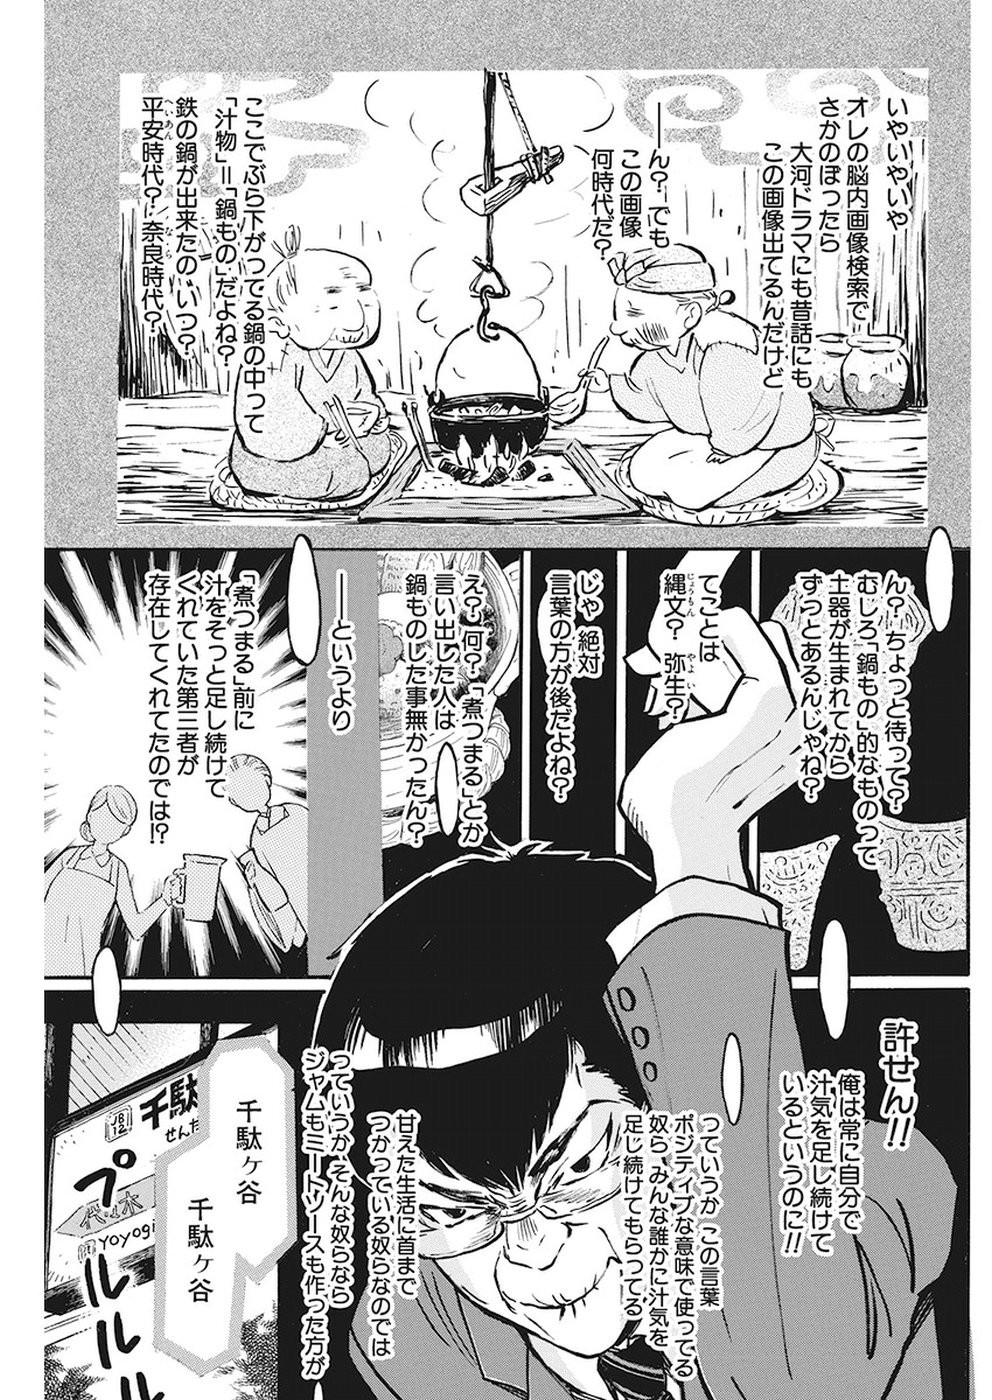 3 Gatsu no Lion - Chapter 156 - Page 5